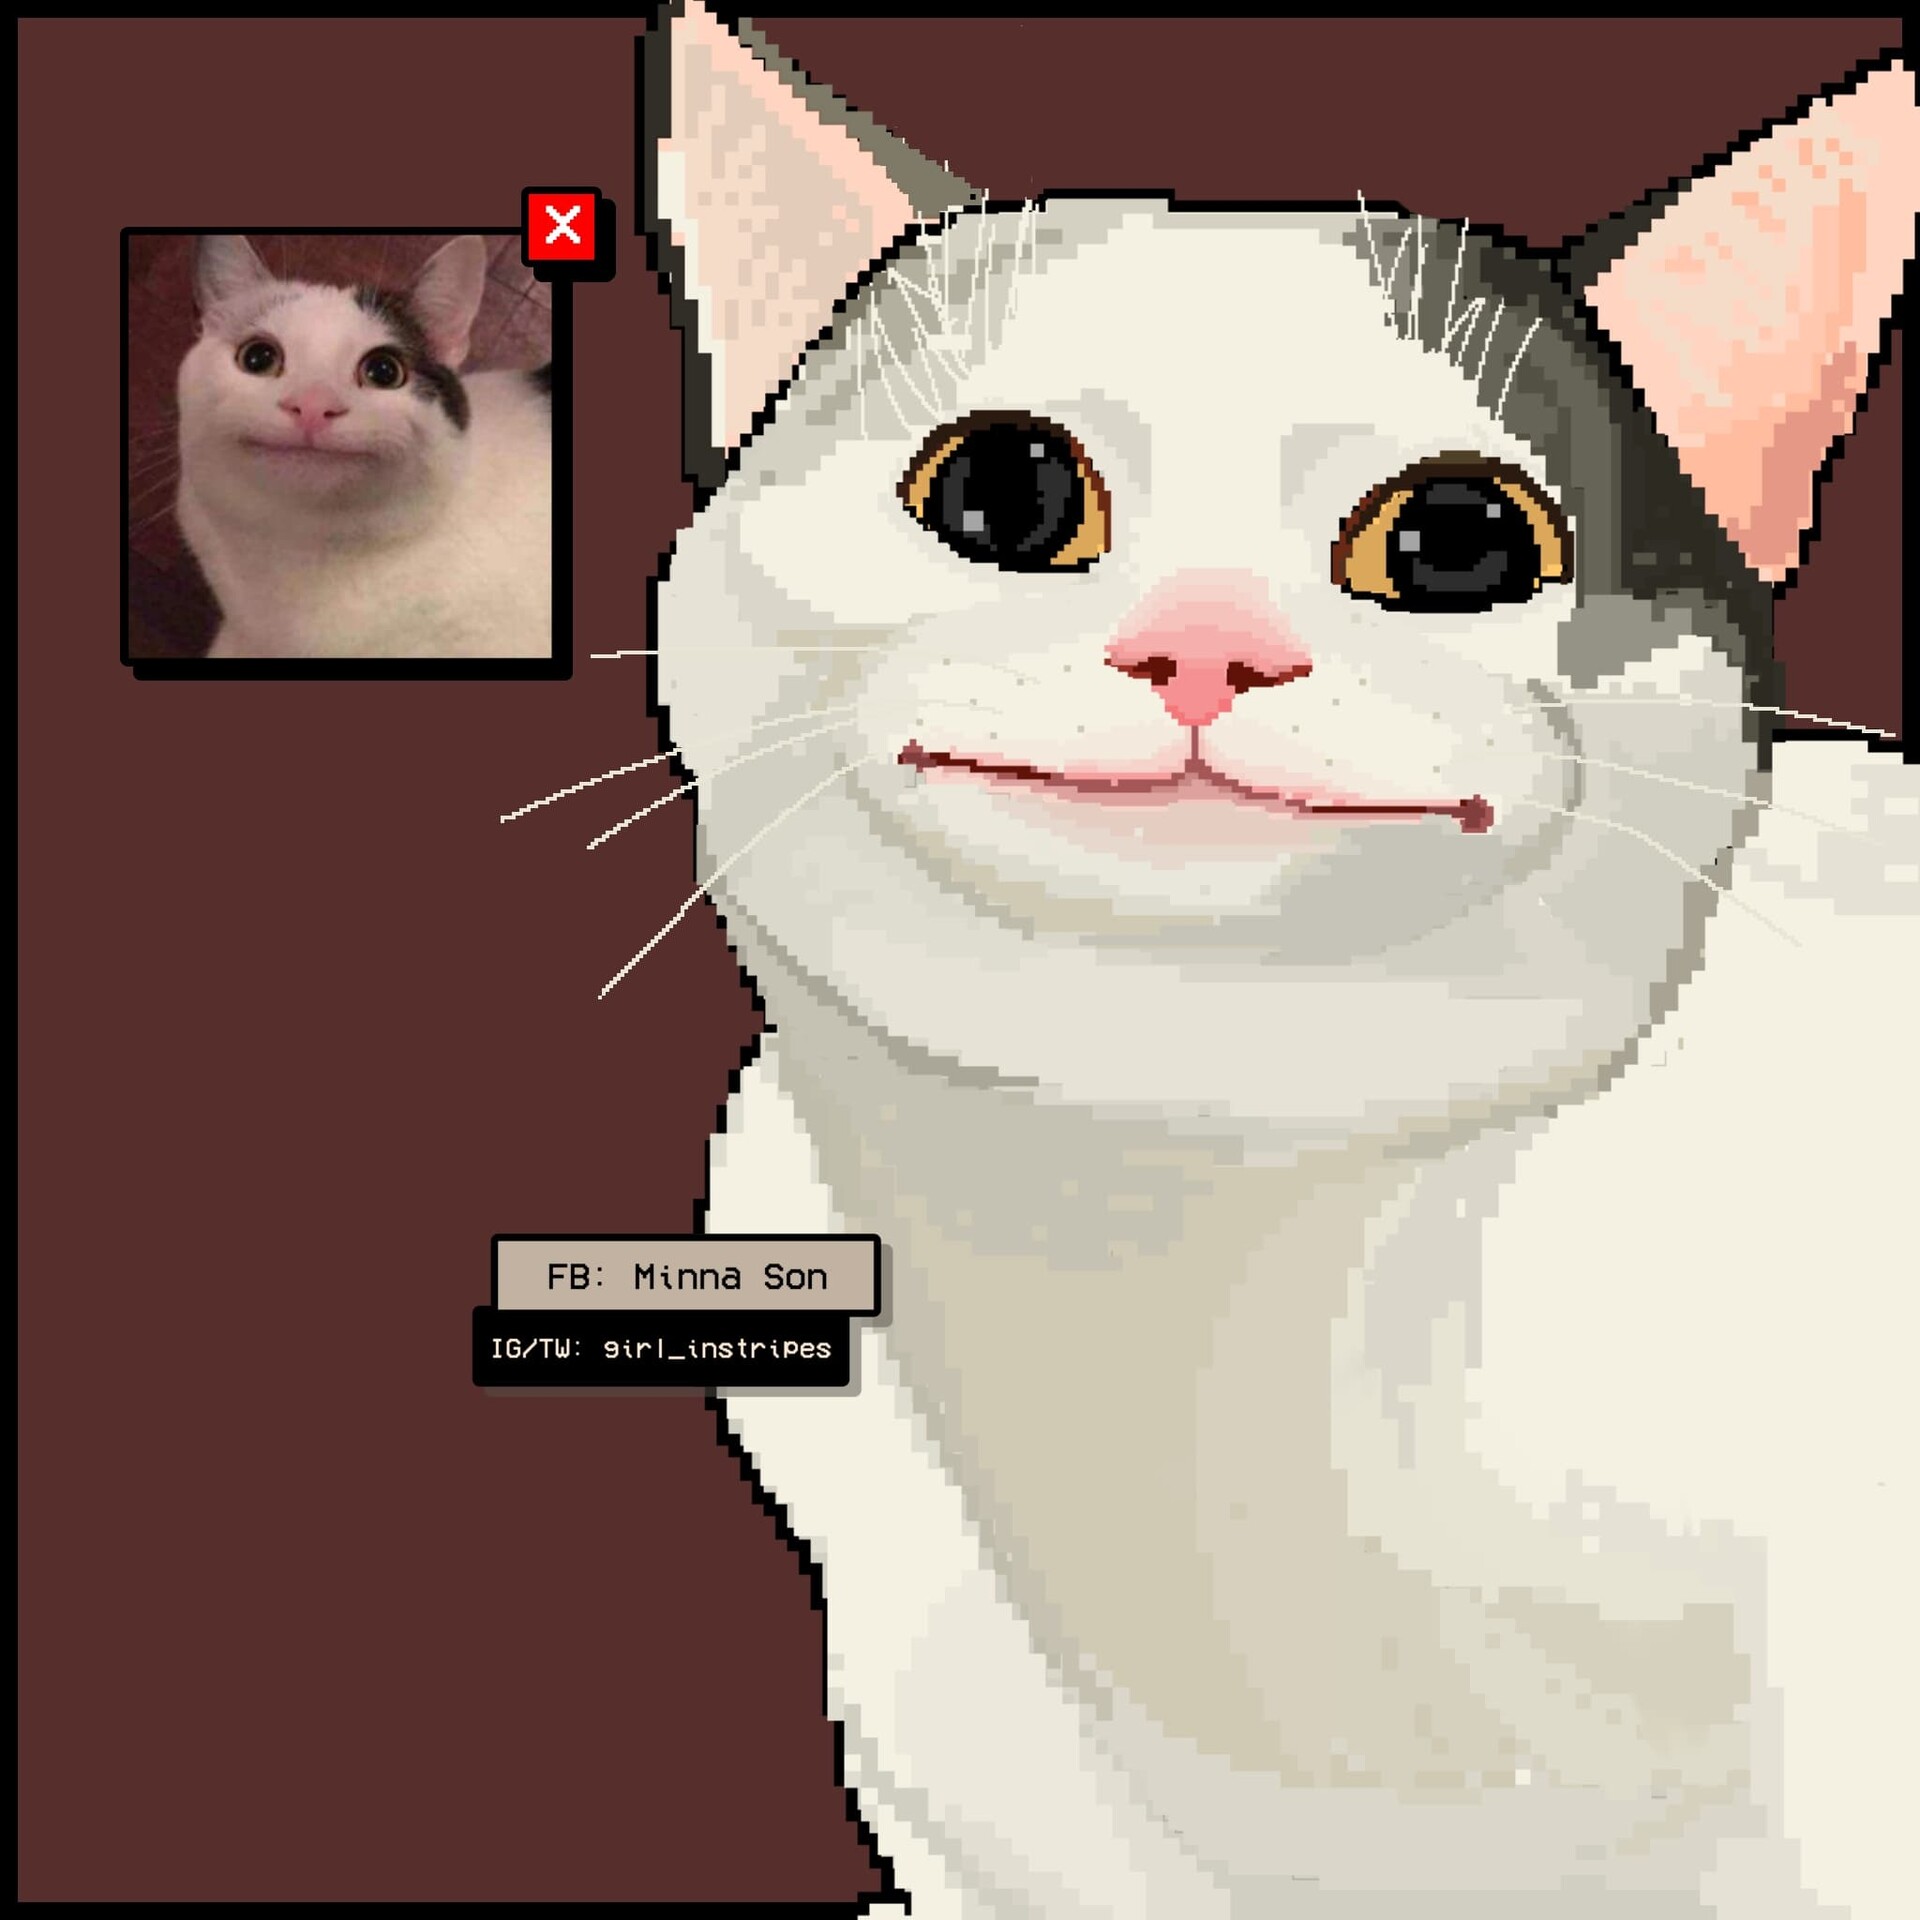 ArtStation - Beluga The Meme Cat Emotes